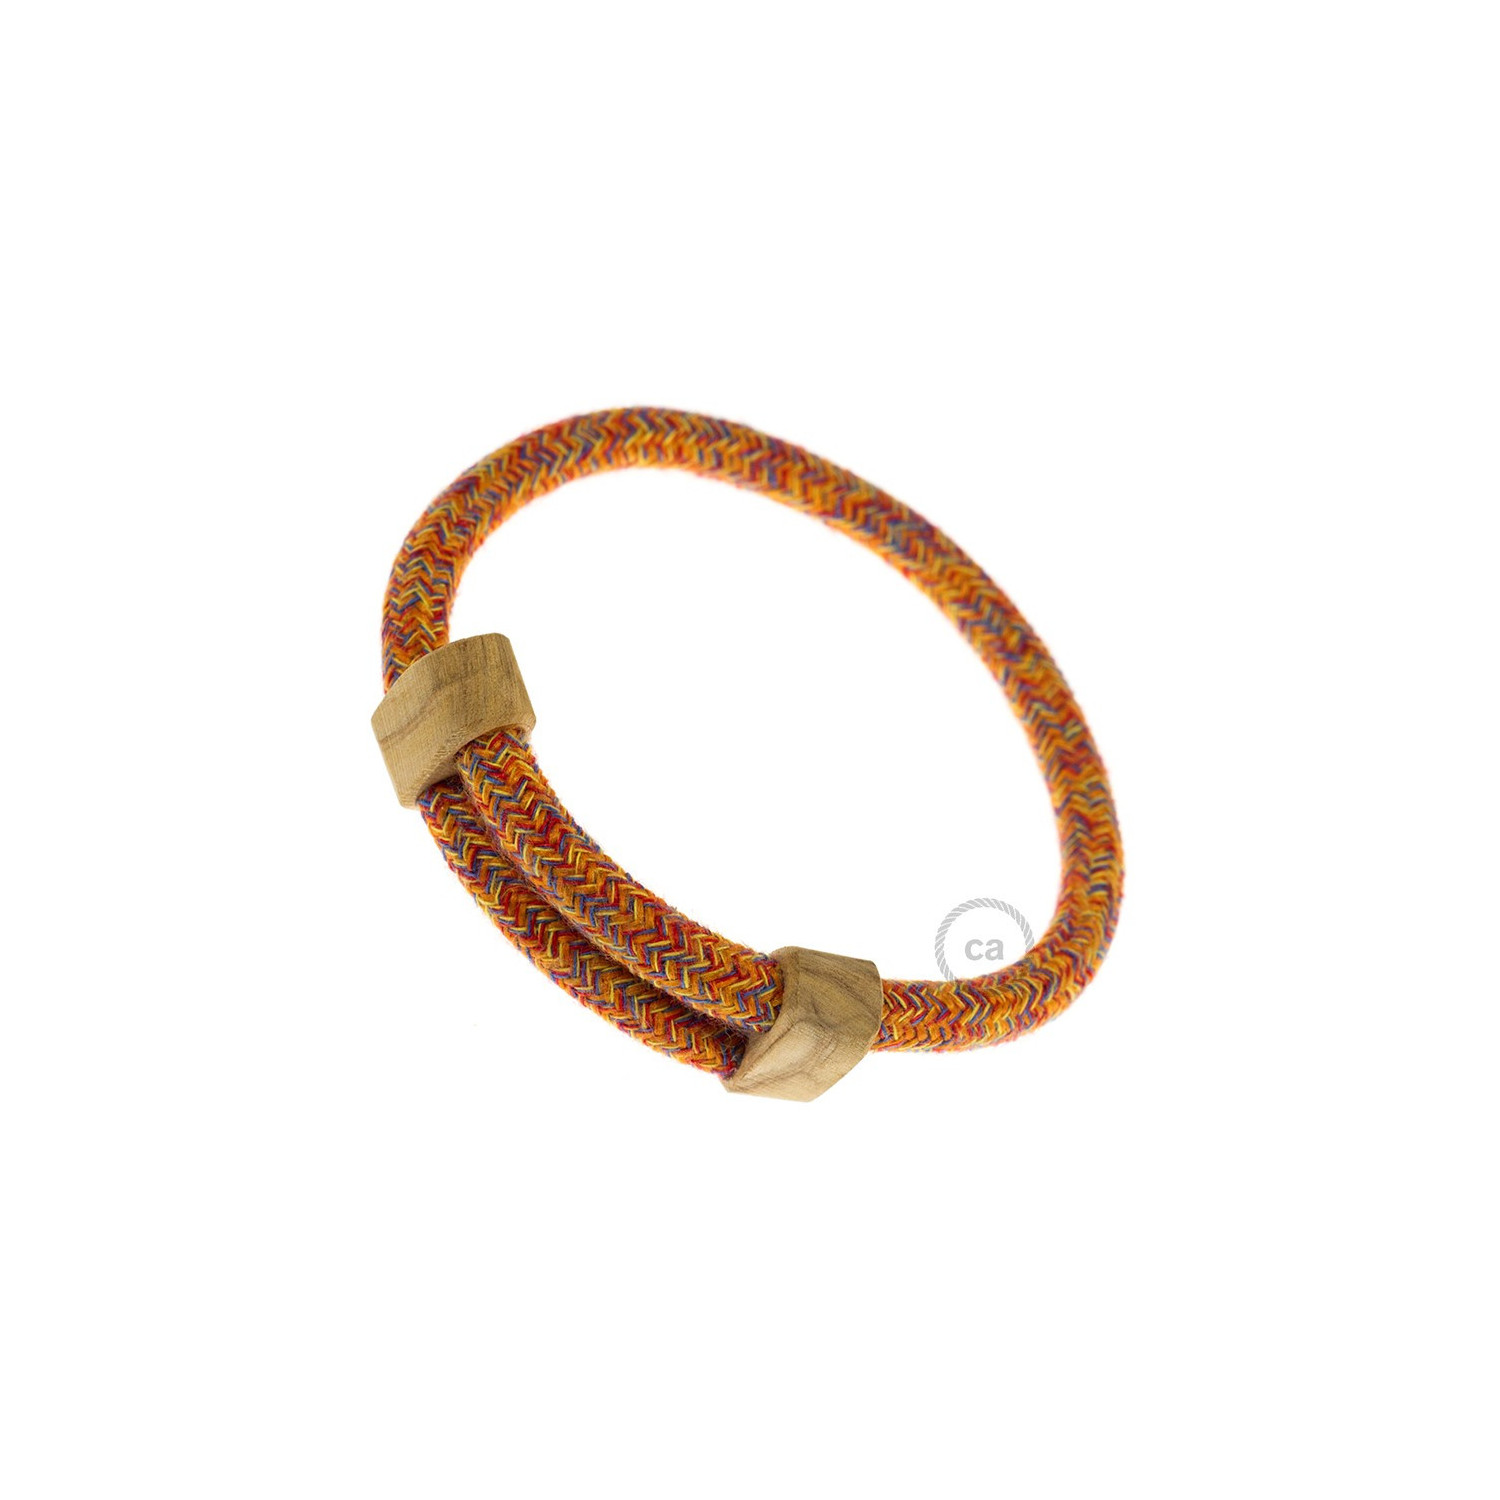 Creative-Bracelet in Cotone Indian Summer RX07. Chiusura scorrevole in legno. Made in Italy.